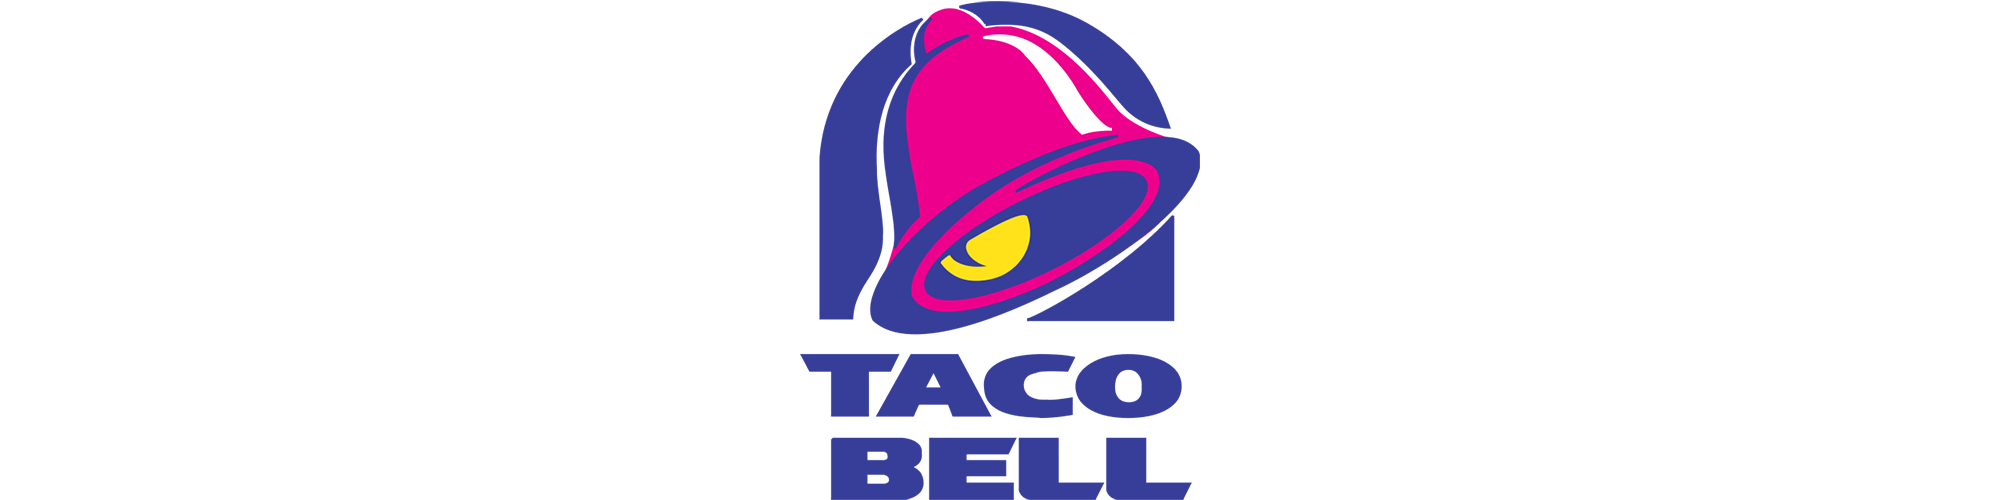 Taco Bell's logo uses pink color psychology